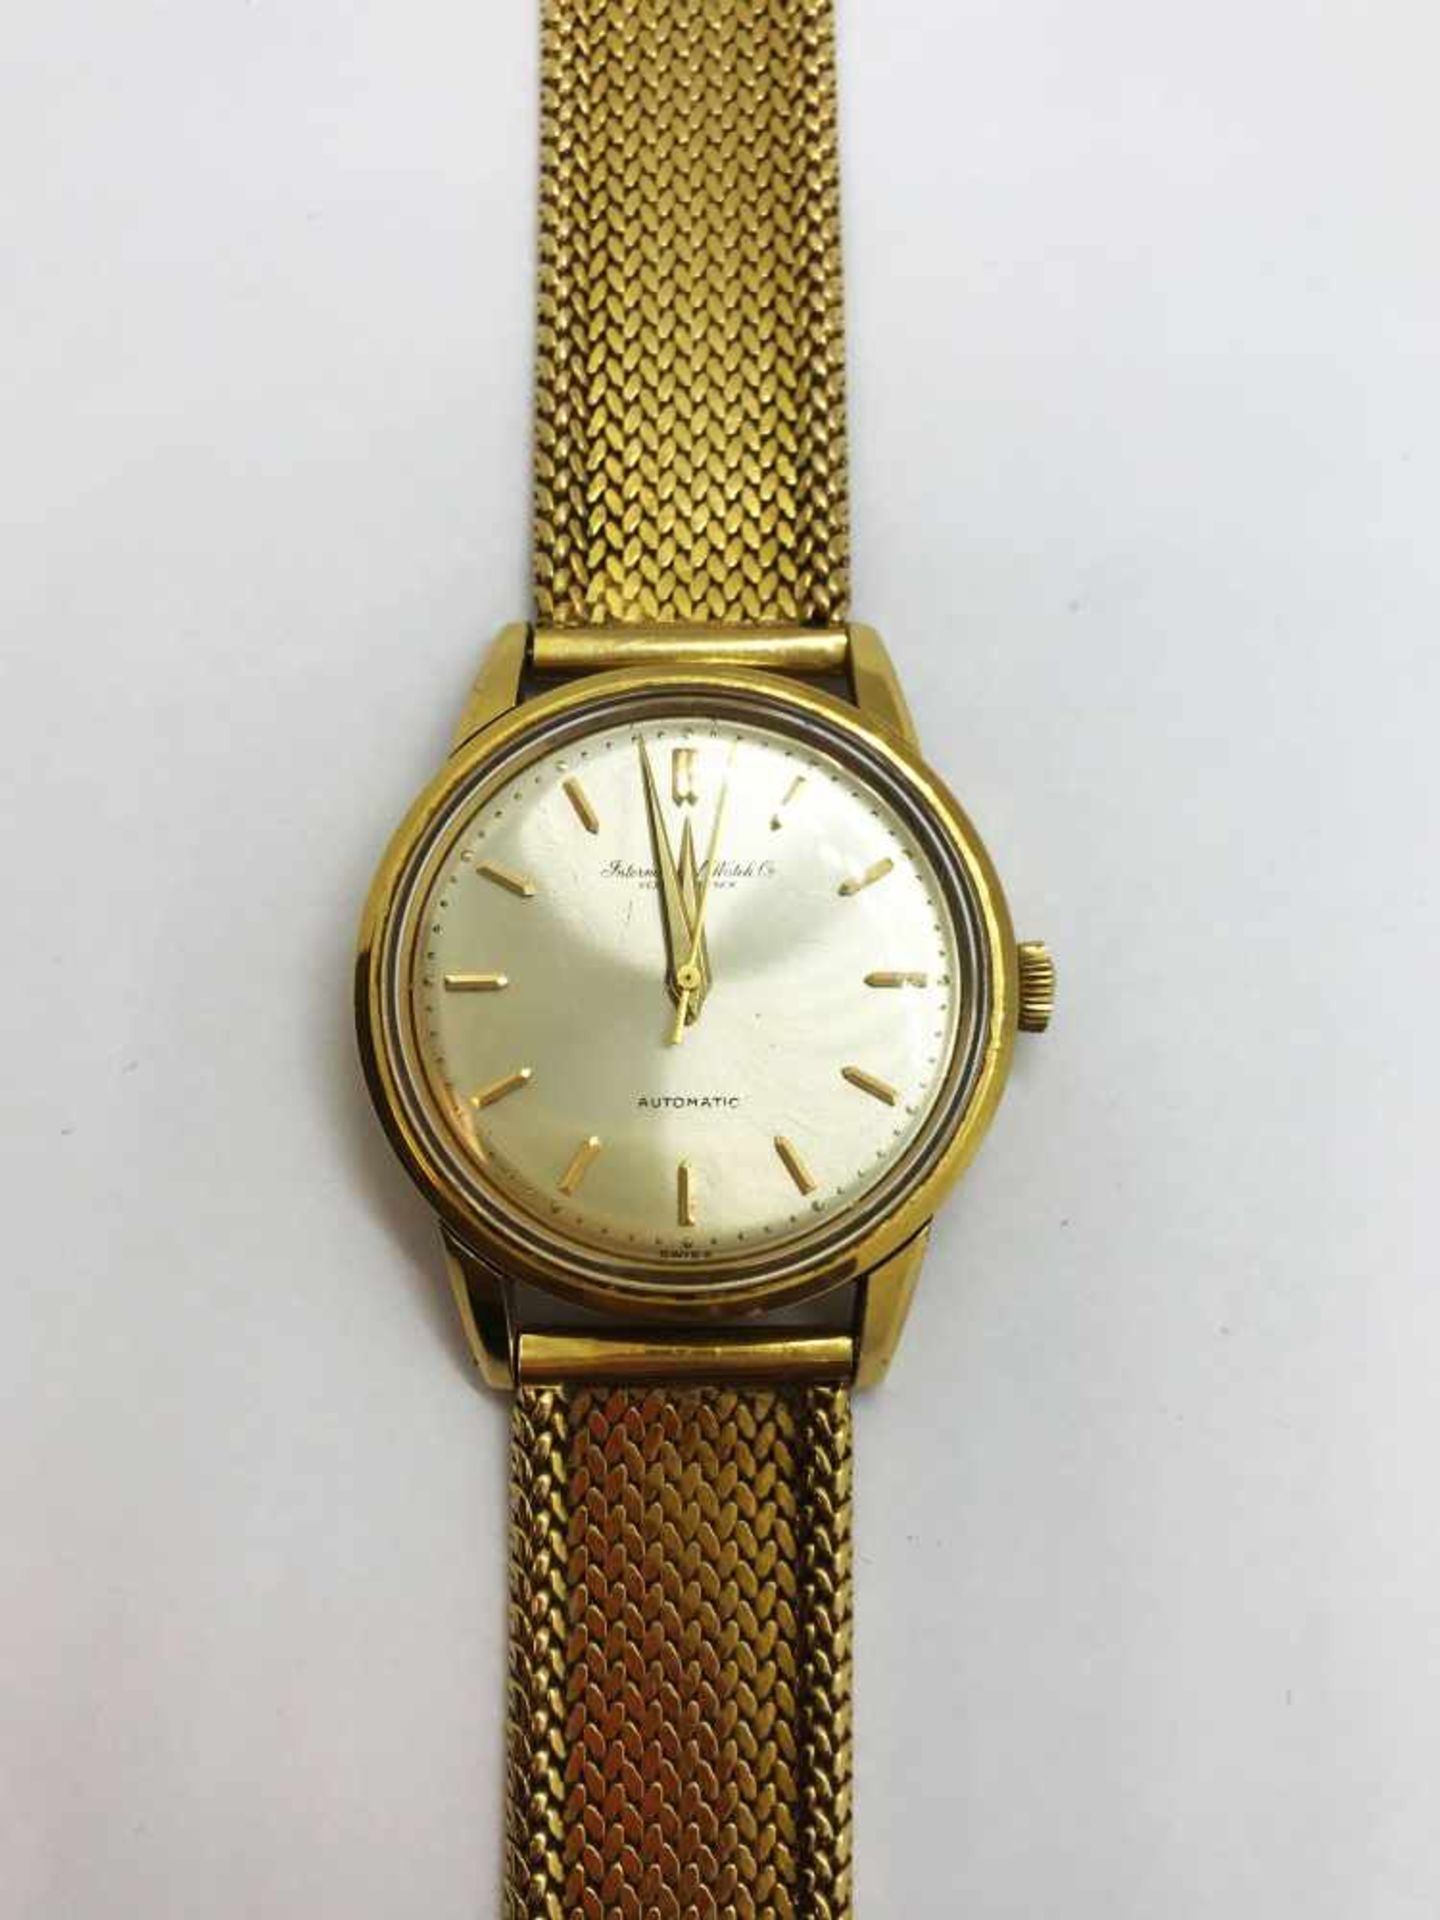 IWC (International Watch Company) Herrenarmbanduhr, 750er GG, Automatic, Gebrauchsspuren, L. 21 - Bild 3 aus 5